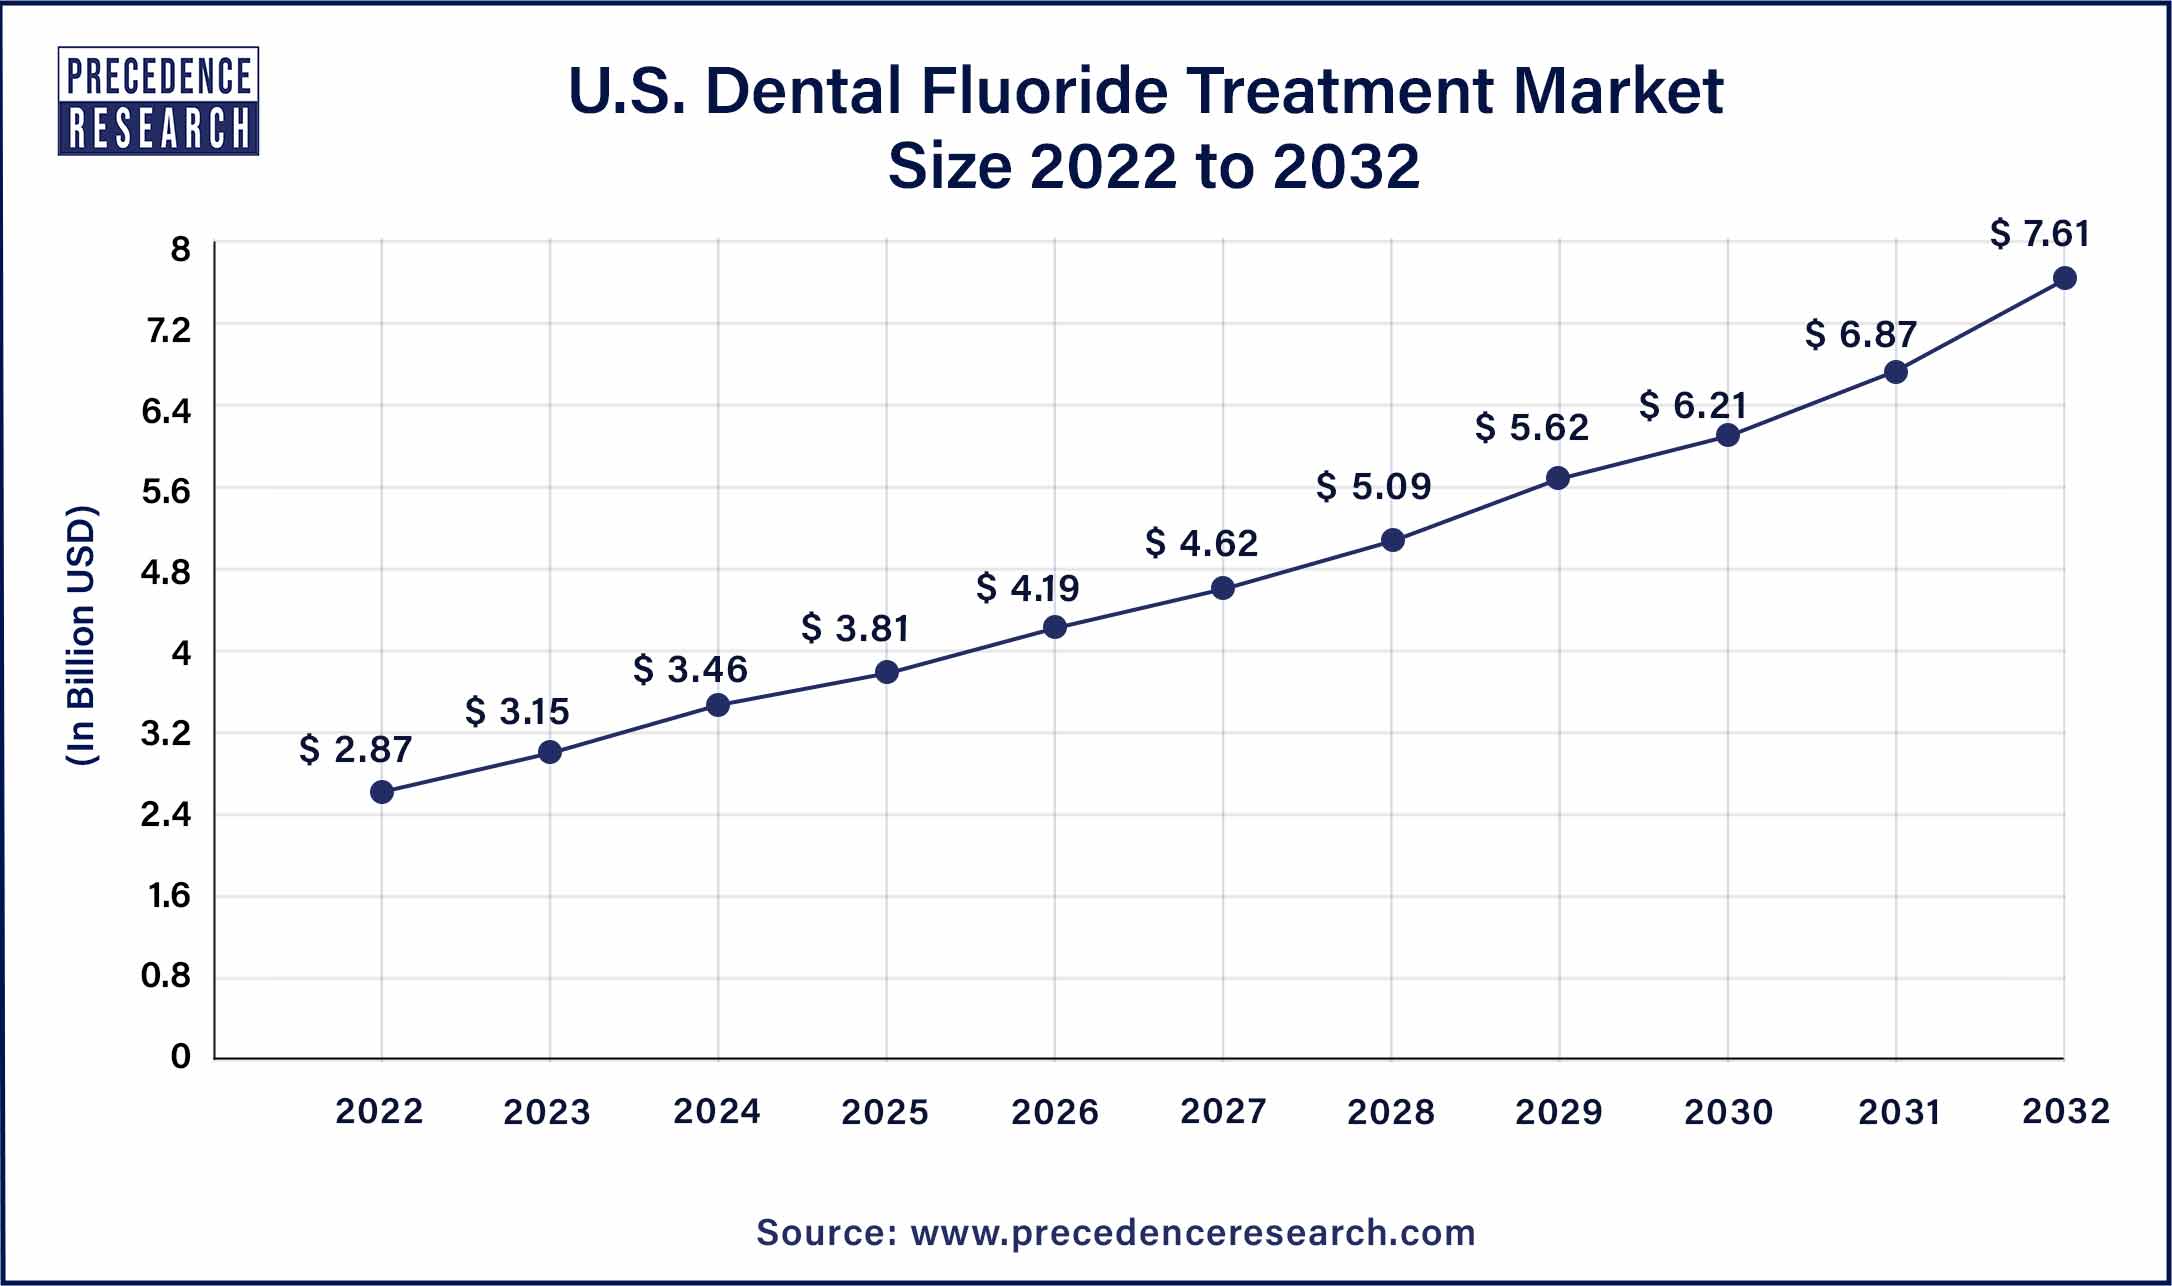 U.S. Dental Fluoride Treatment Market Size 2023 To 2032